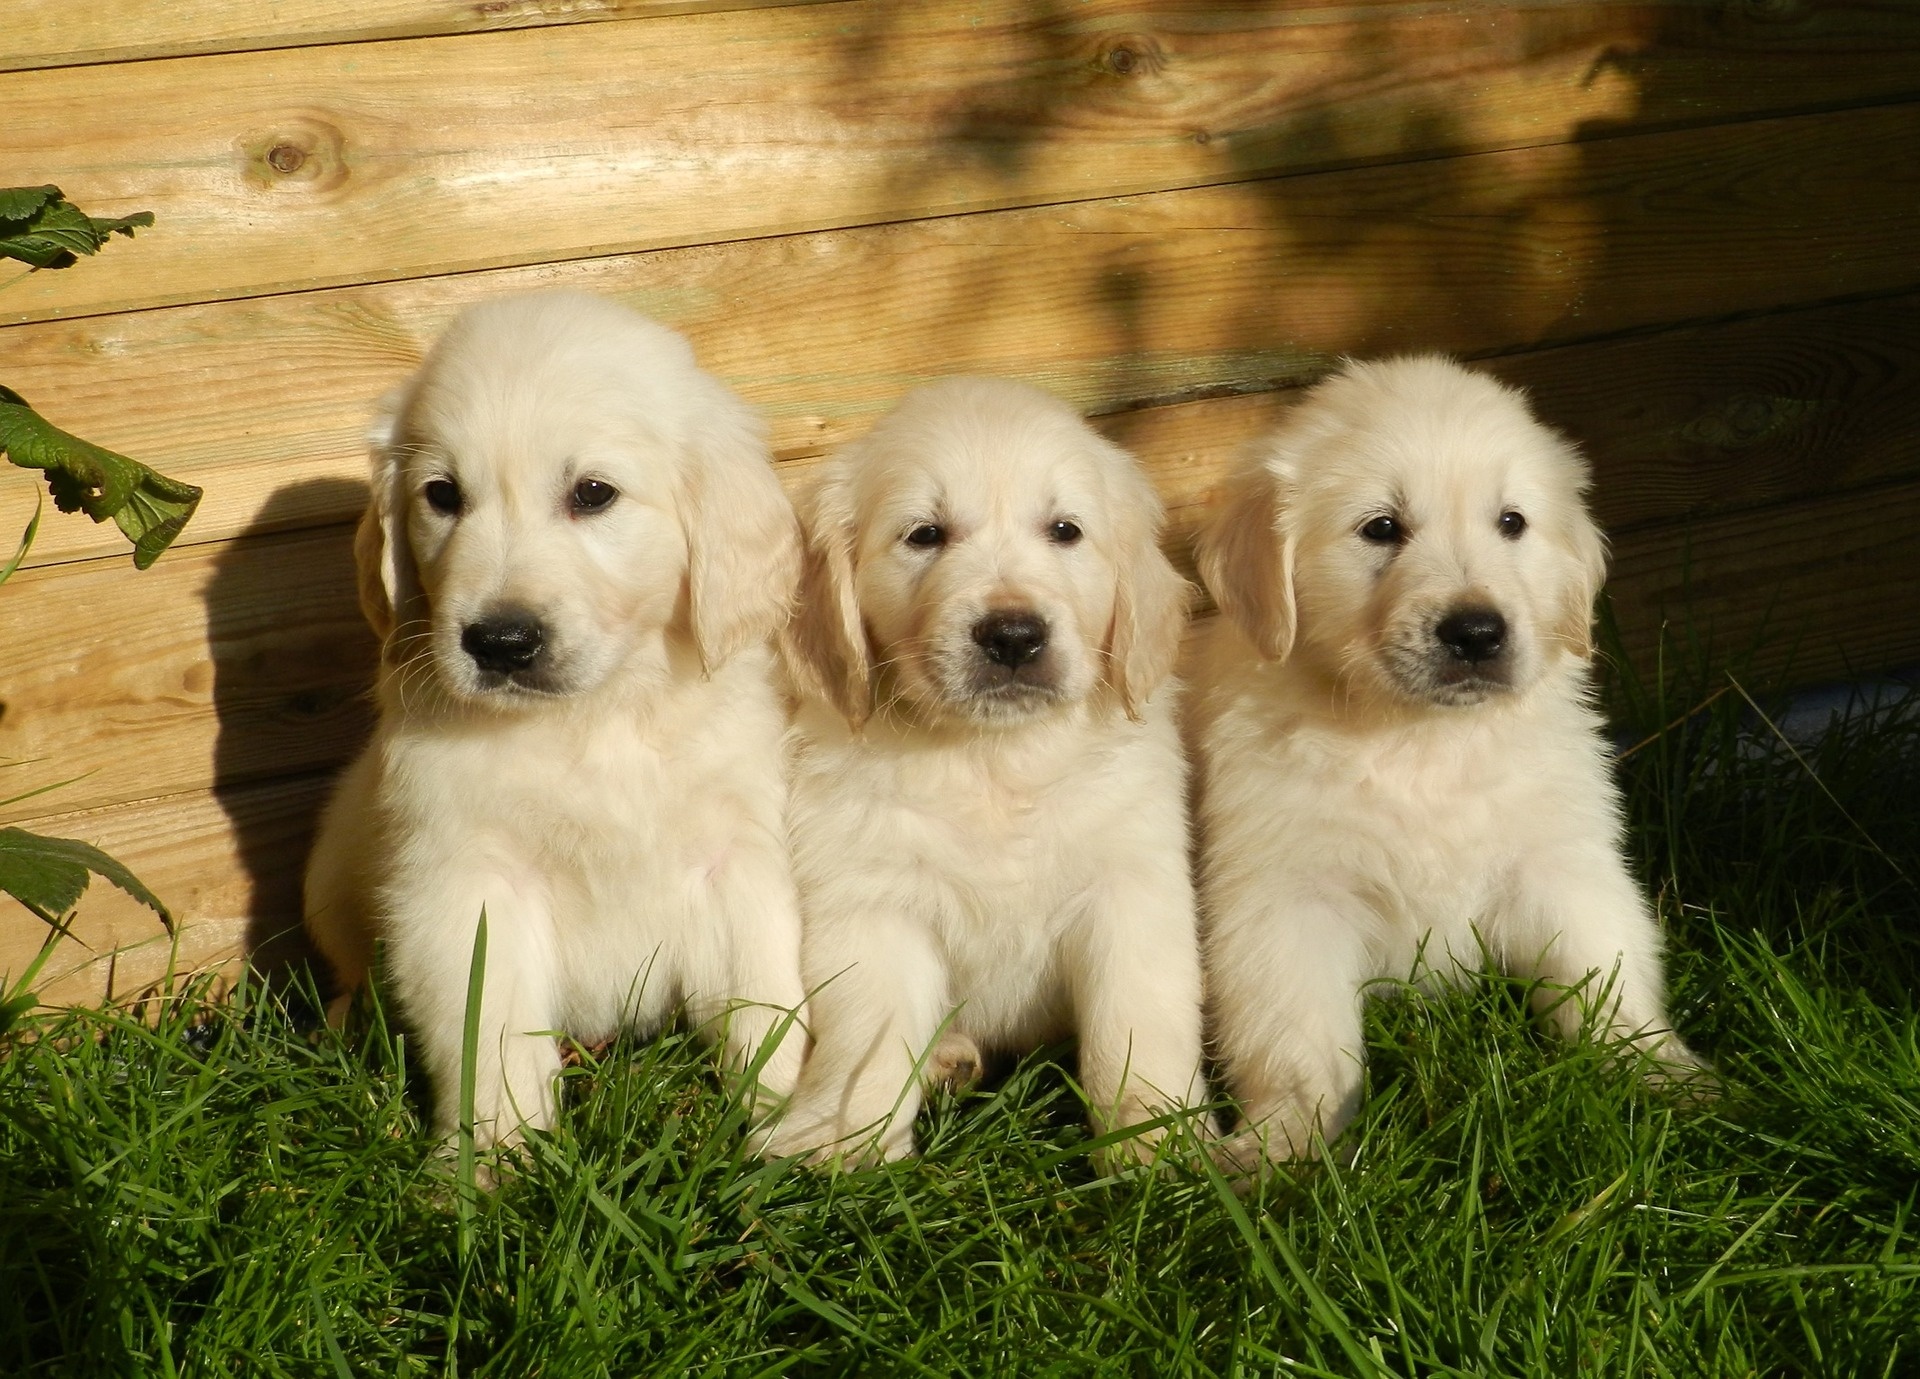 Download free photo of Puppies,dog,golden,retriever,nice - from needpix.com